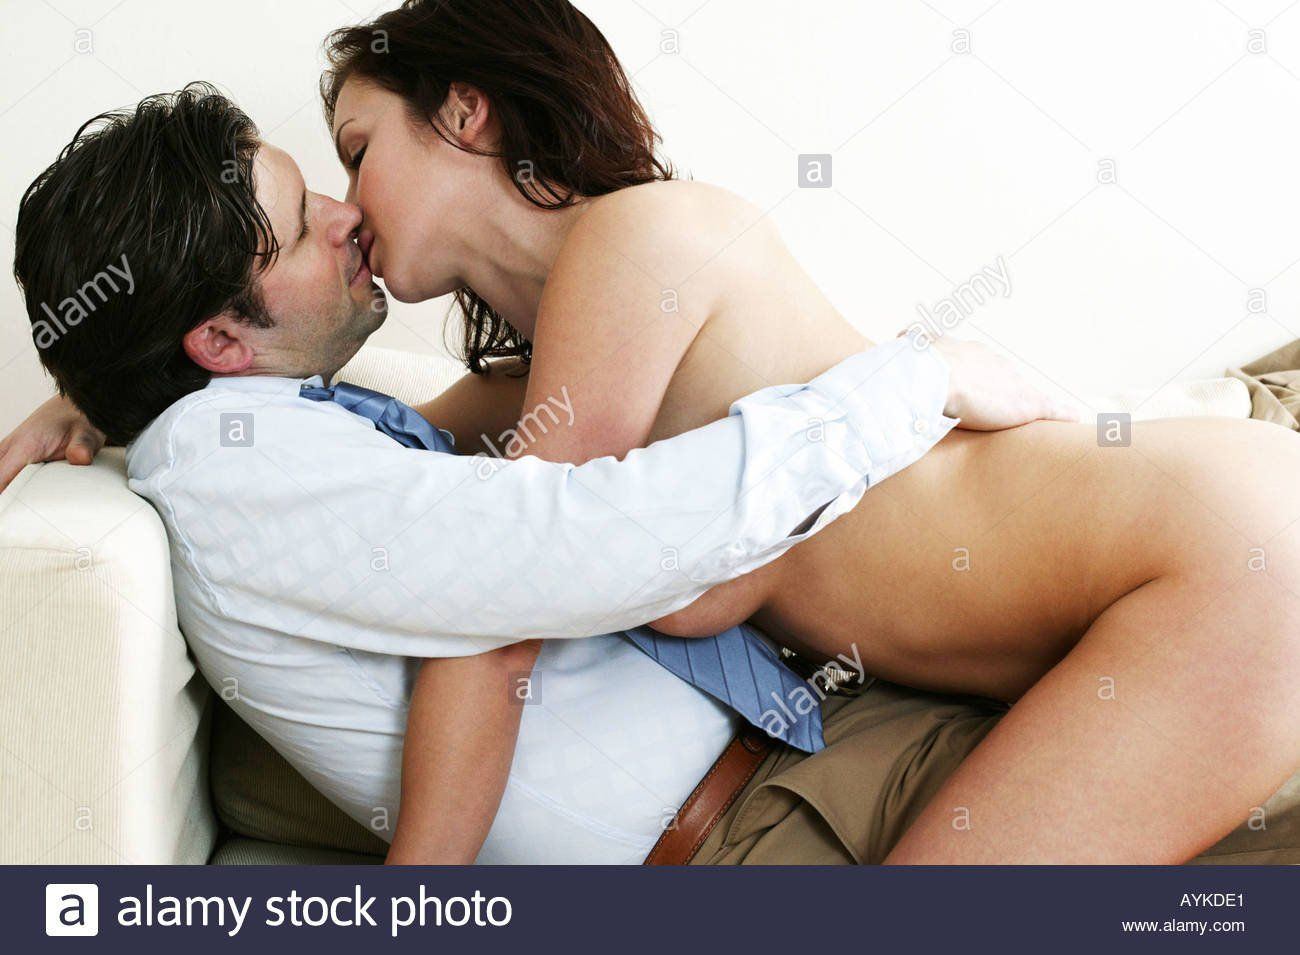 Man nude kissing girlfriend